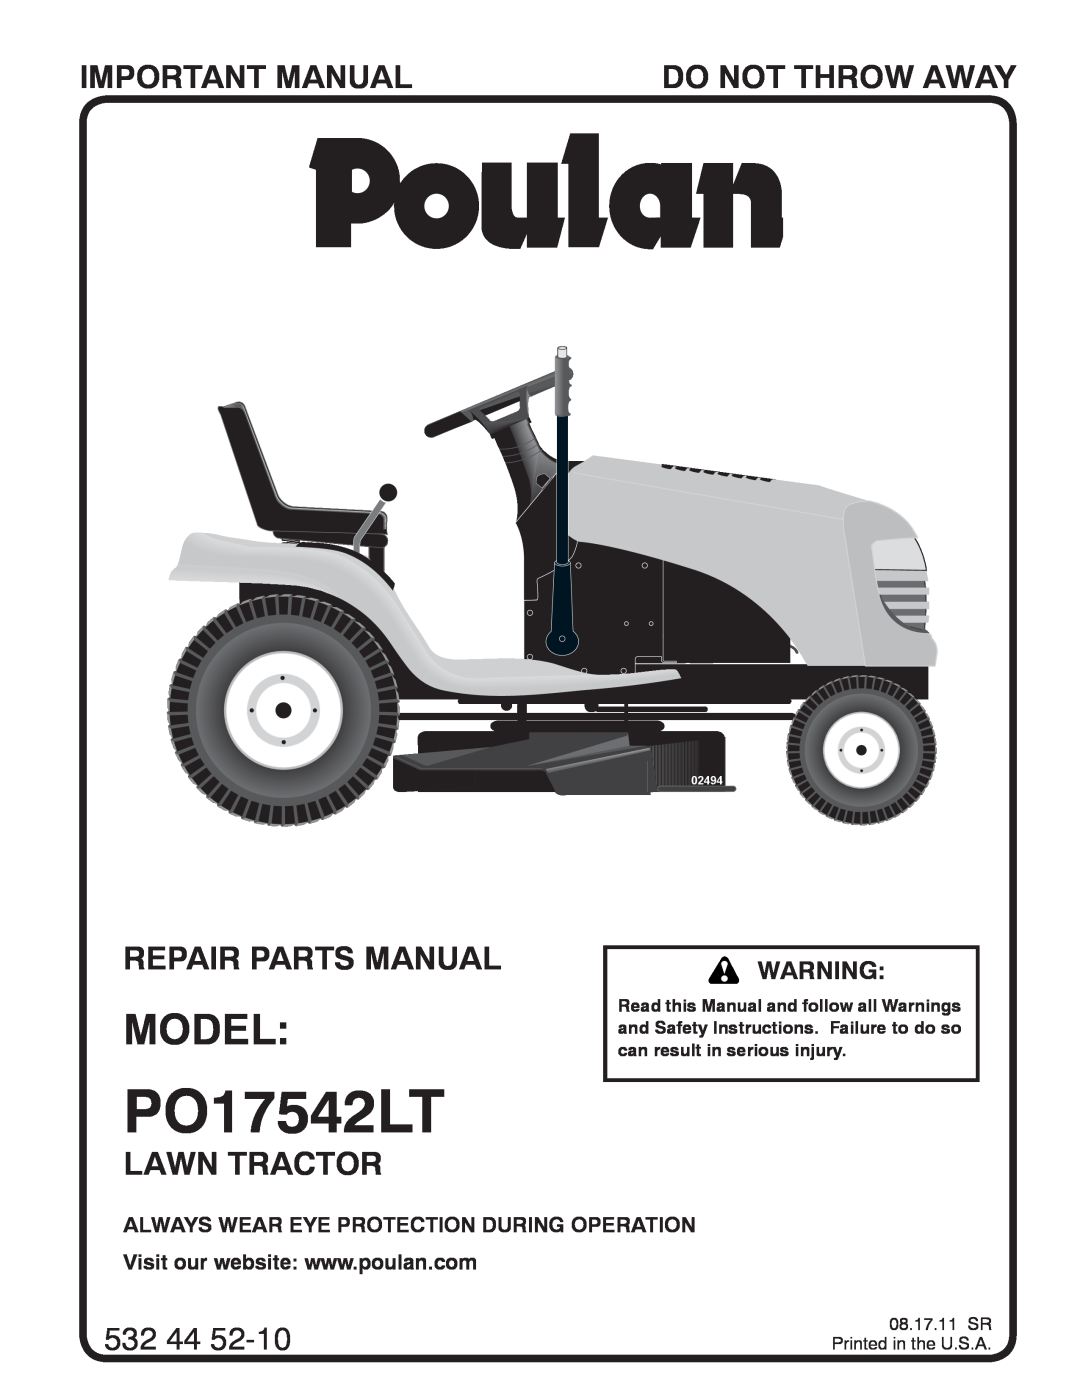 Poulan PO17542LT manual Model, Important Manual, Do Not Throw Away, Repair Parts Manual, Lawn Tractor, 532, 02494 